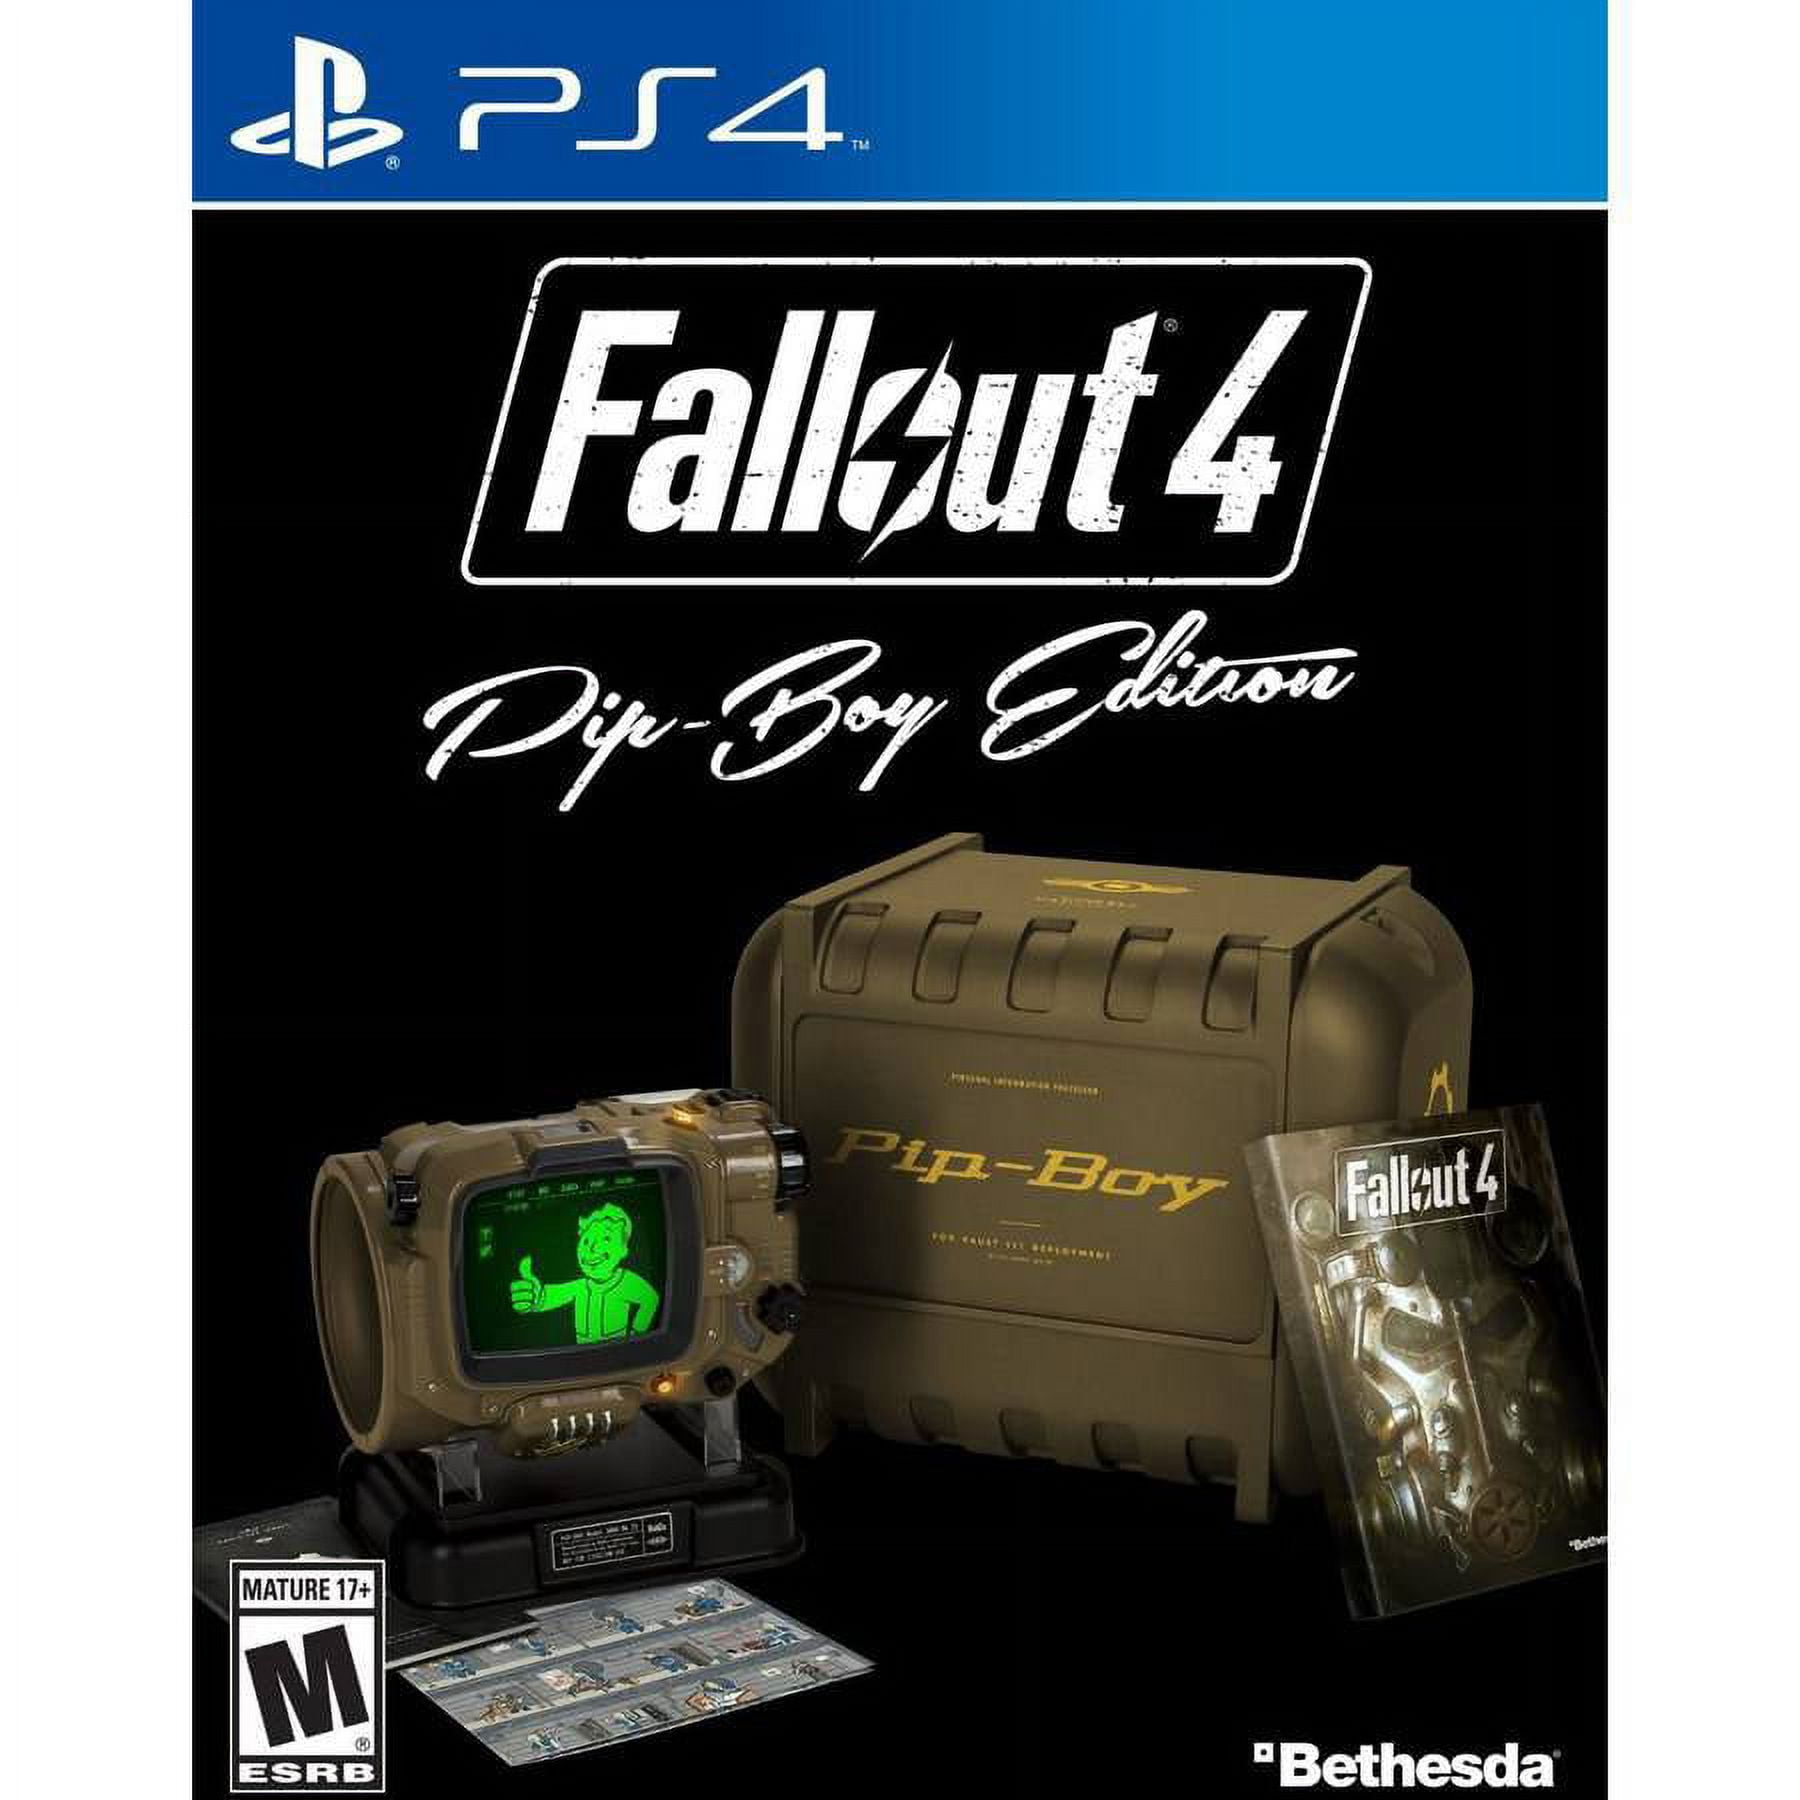 Fallout 4 - Pip-Boy Edition - PlayStation 4 - Walmart.com